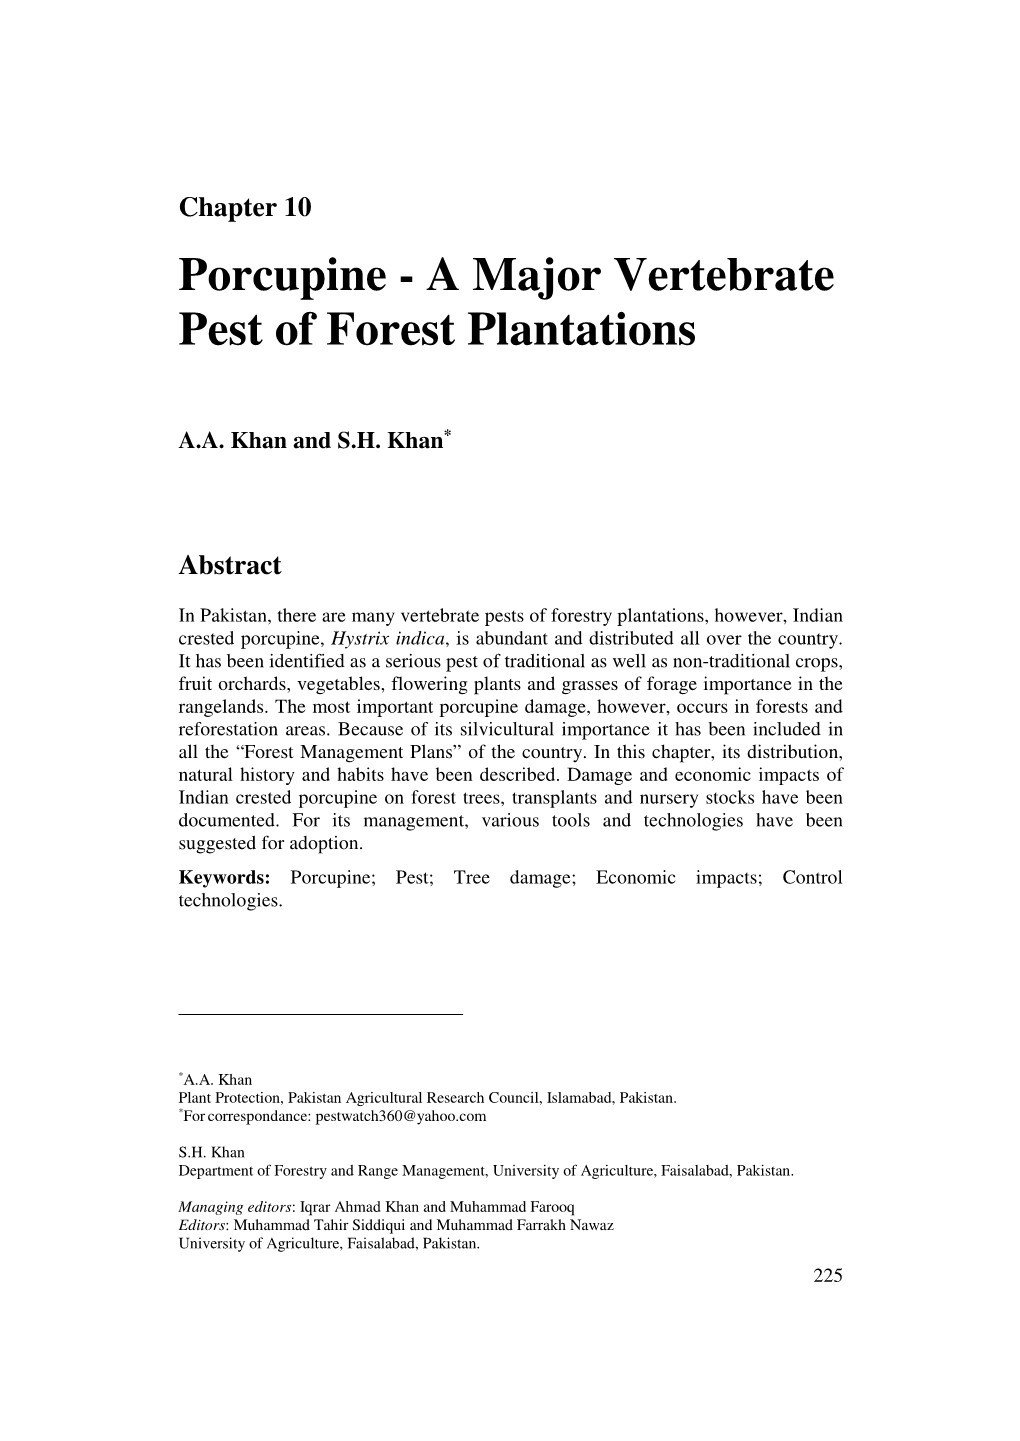 Porcupine - a Major Vertebrate Pest of Forest Plantations